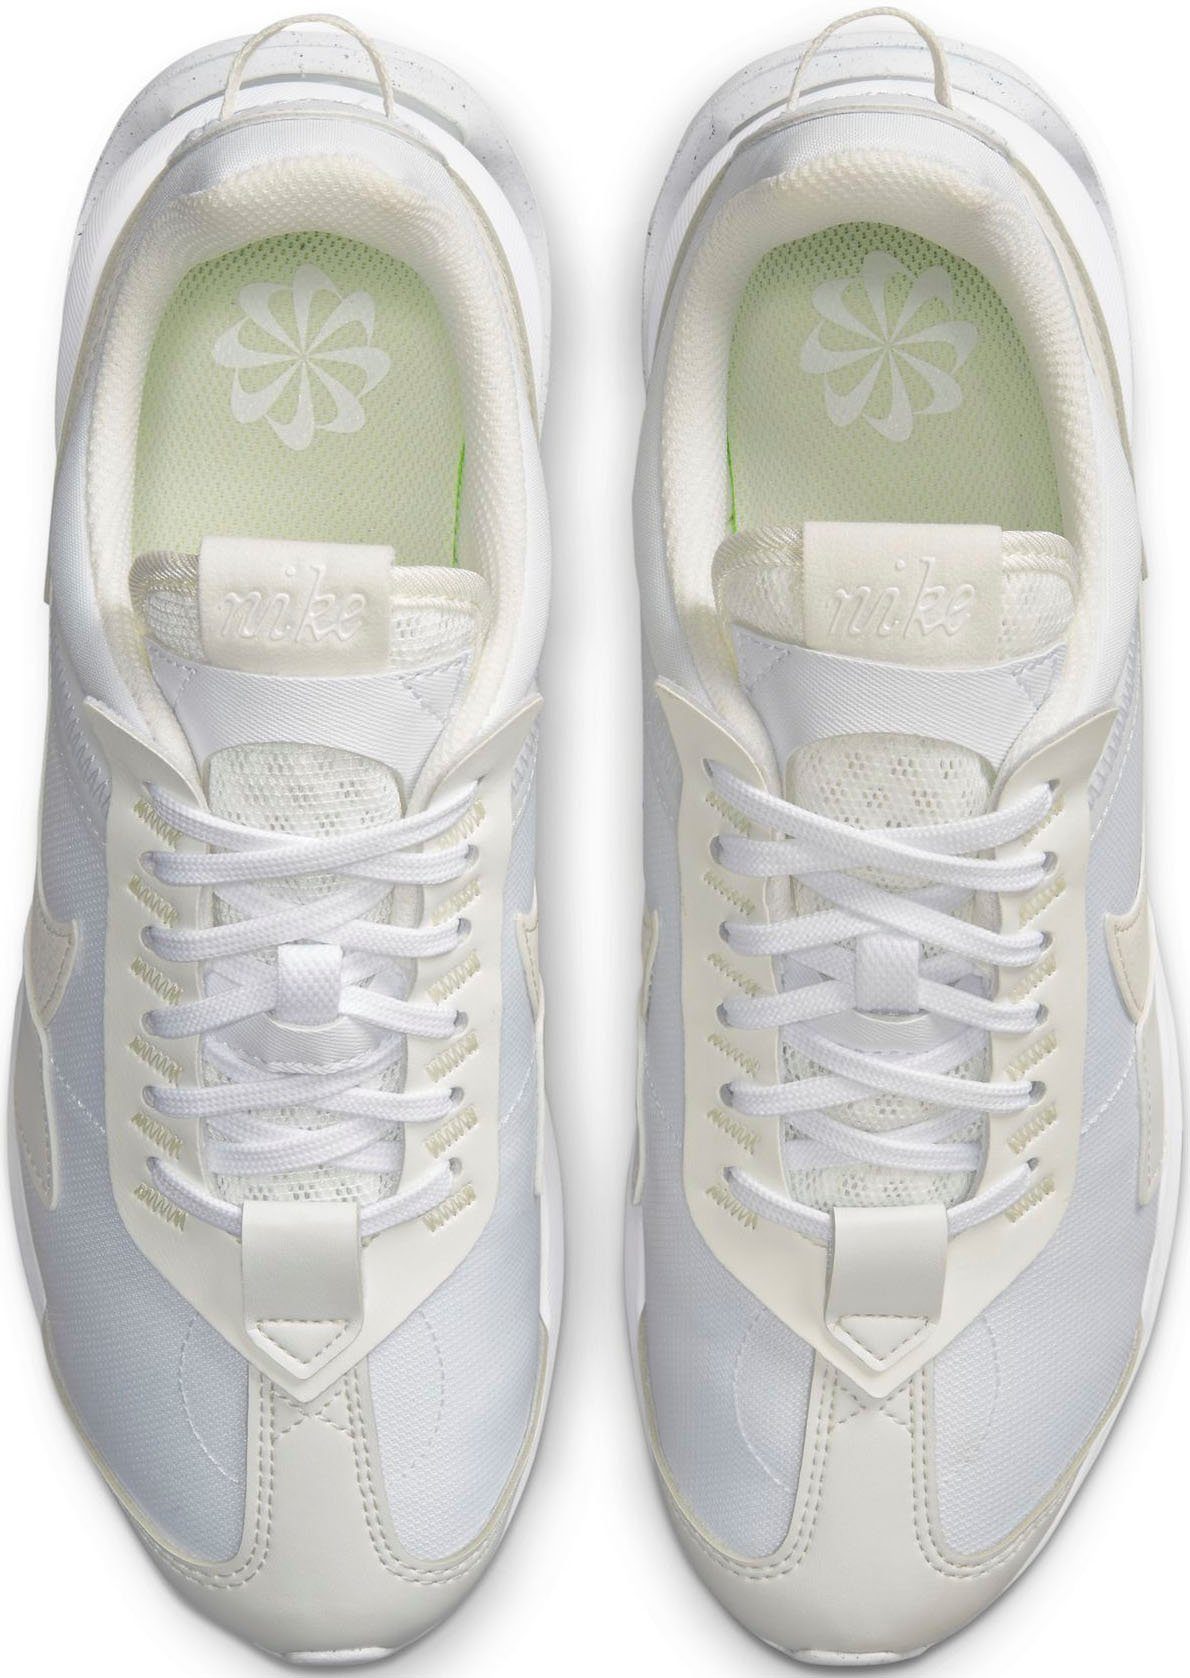 Air Sneaker Pre-Day Max Sportswear Nike